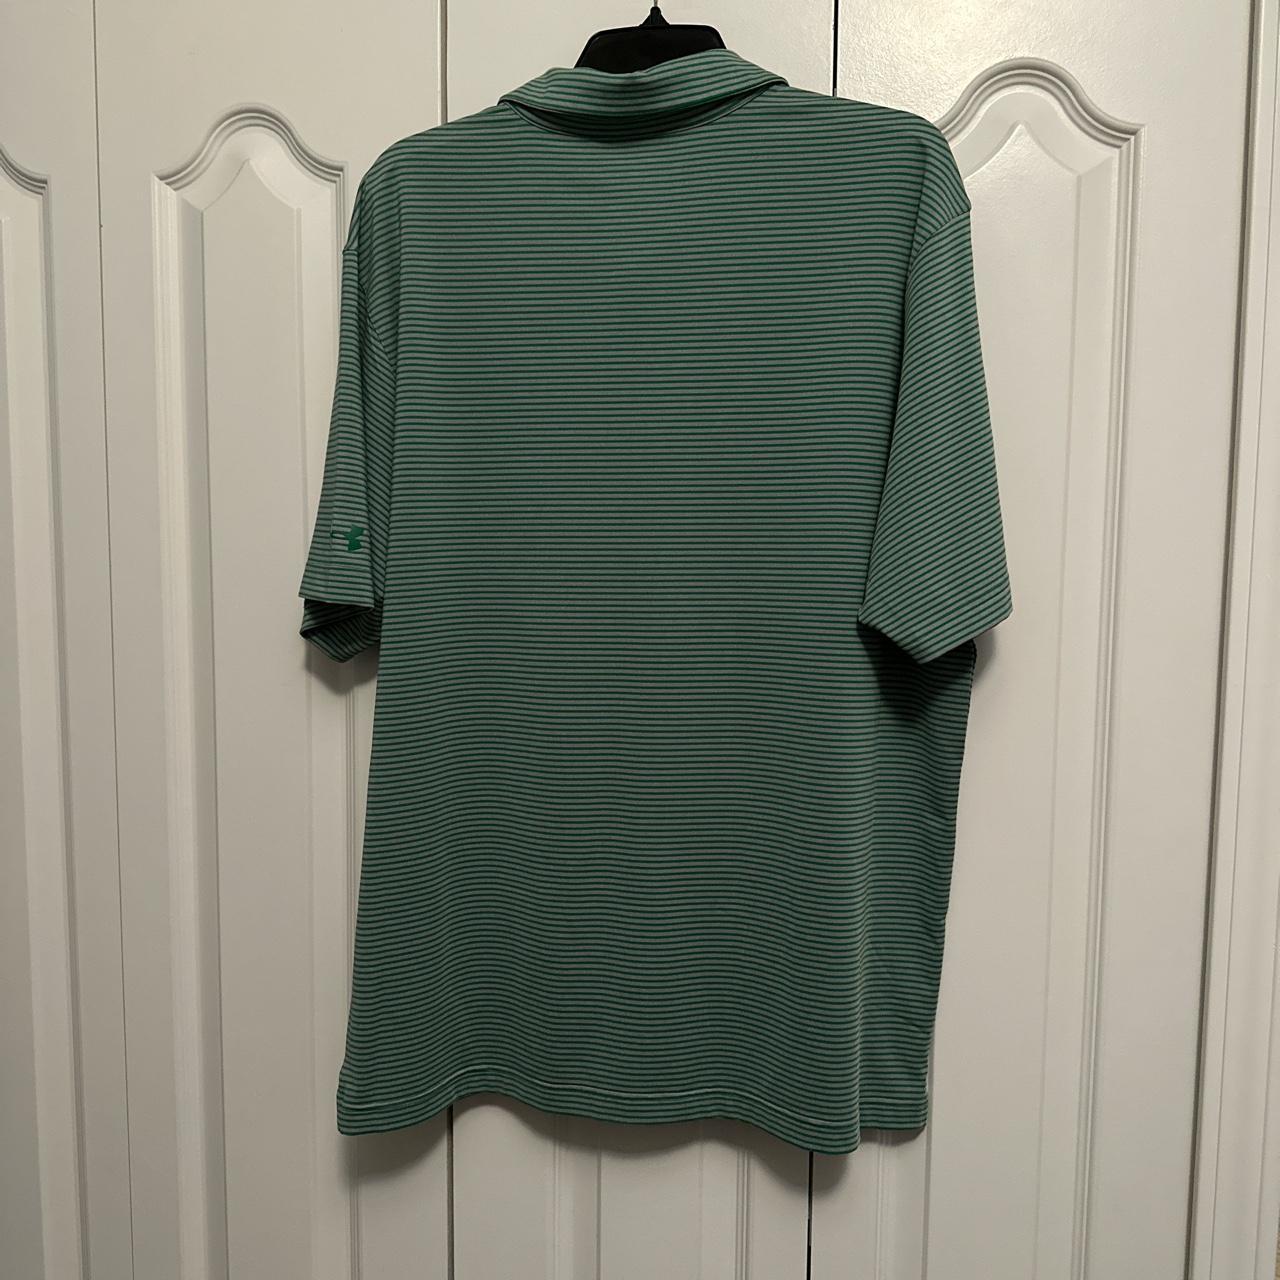 Under Armour Men's Green Polo-shirts (3)